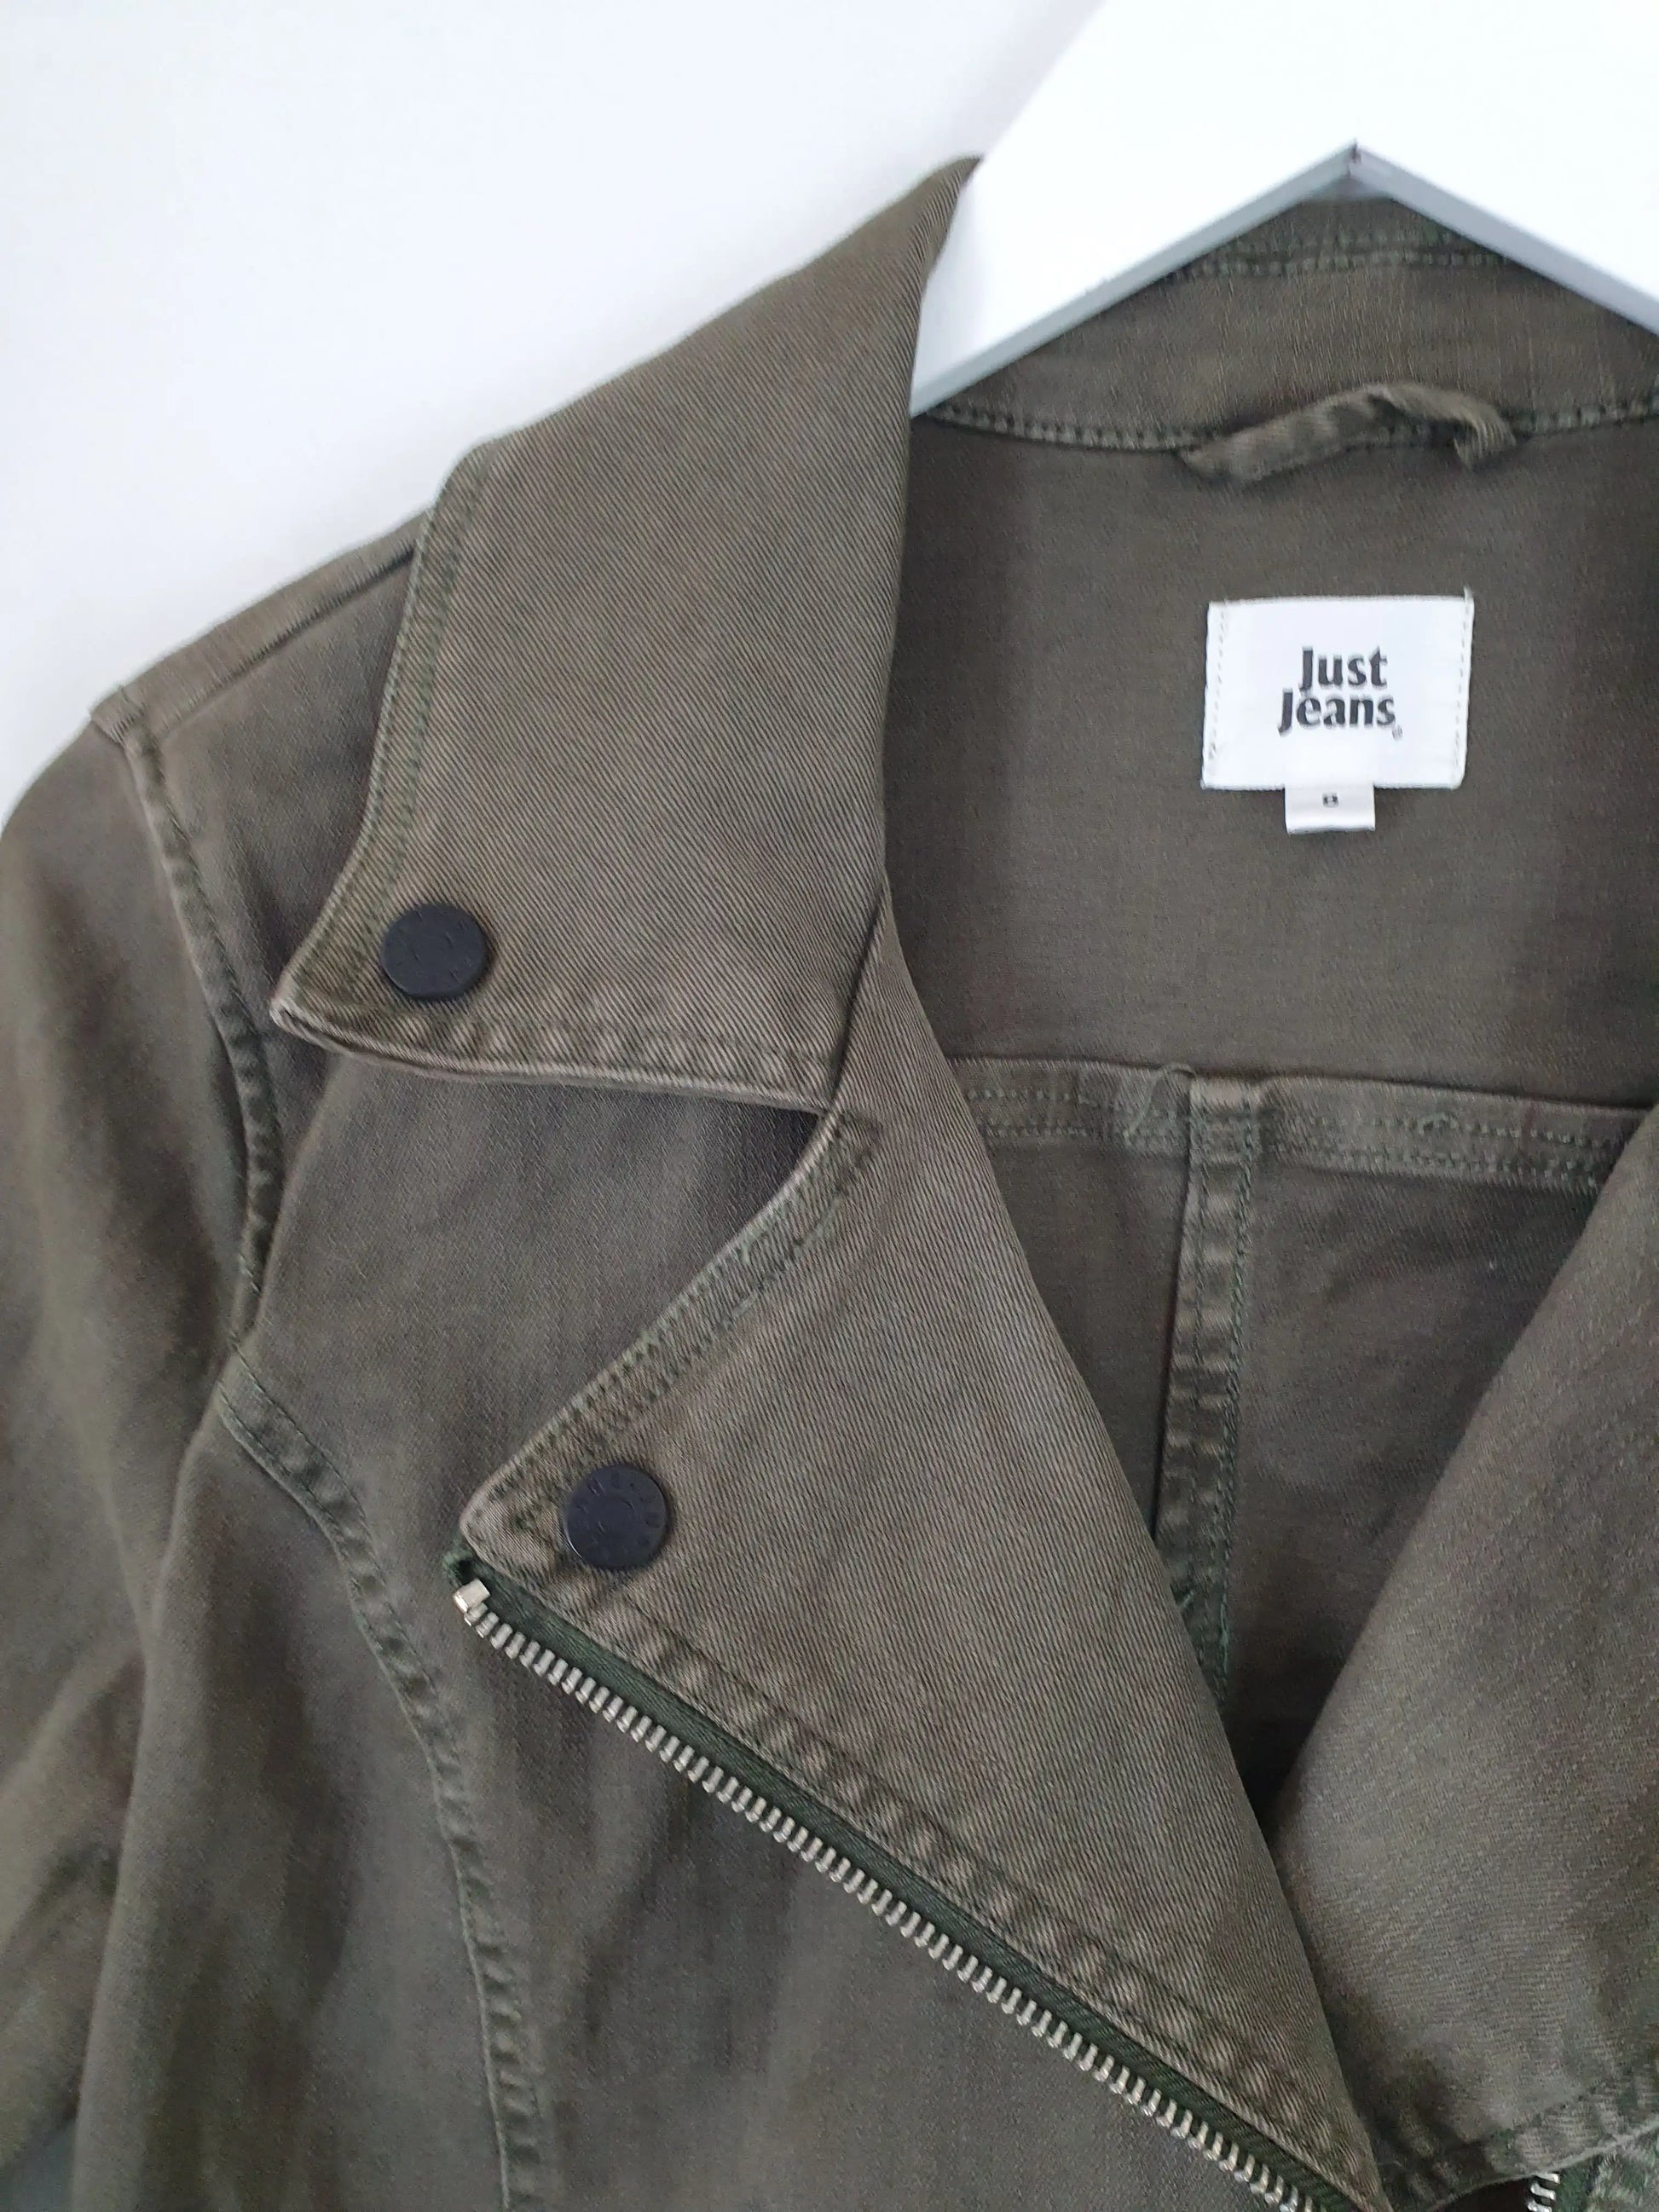 Just Jeans Denim Stretch Asymmetrical Biker  Jacket Size 8 by SwapUp-Online Second Hand Store-Online Thrift Store